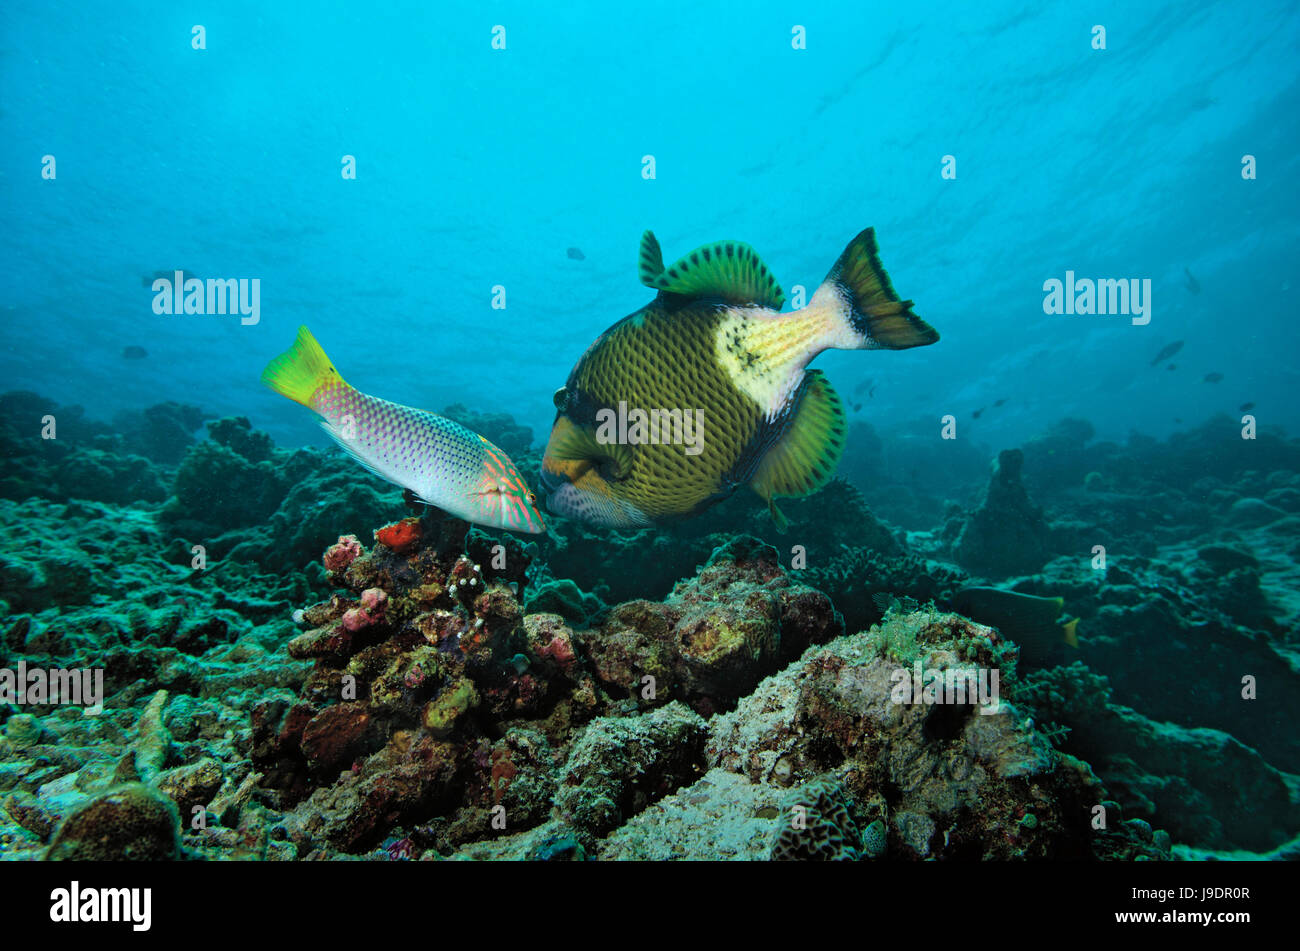 Titan triggerfish, Balistoides viridescens, with hopeful Checkerboard Wrasse, Halichoeres hortulanus, on coral reef in Maldives Stock Photo